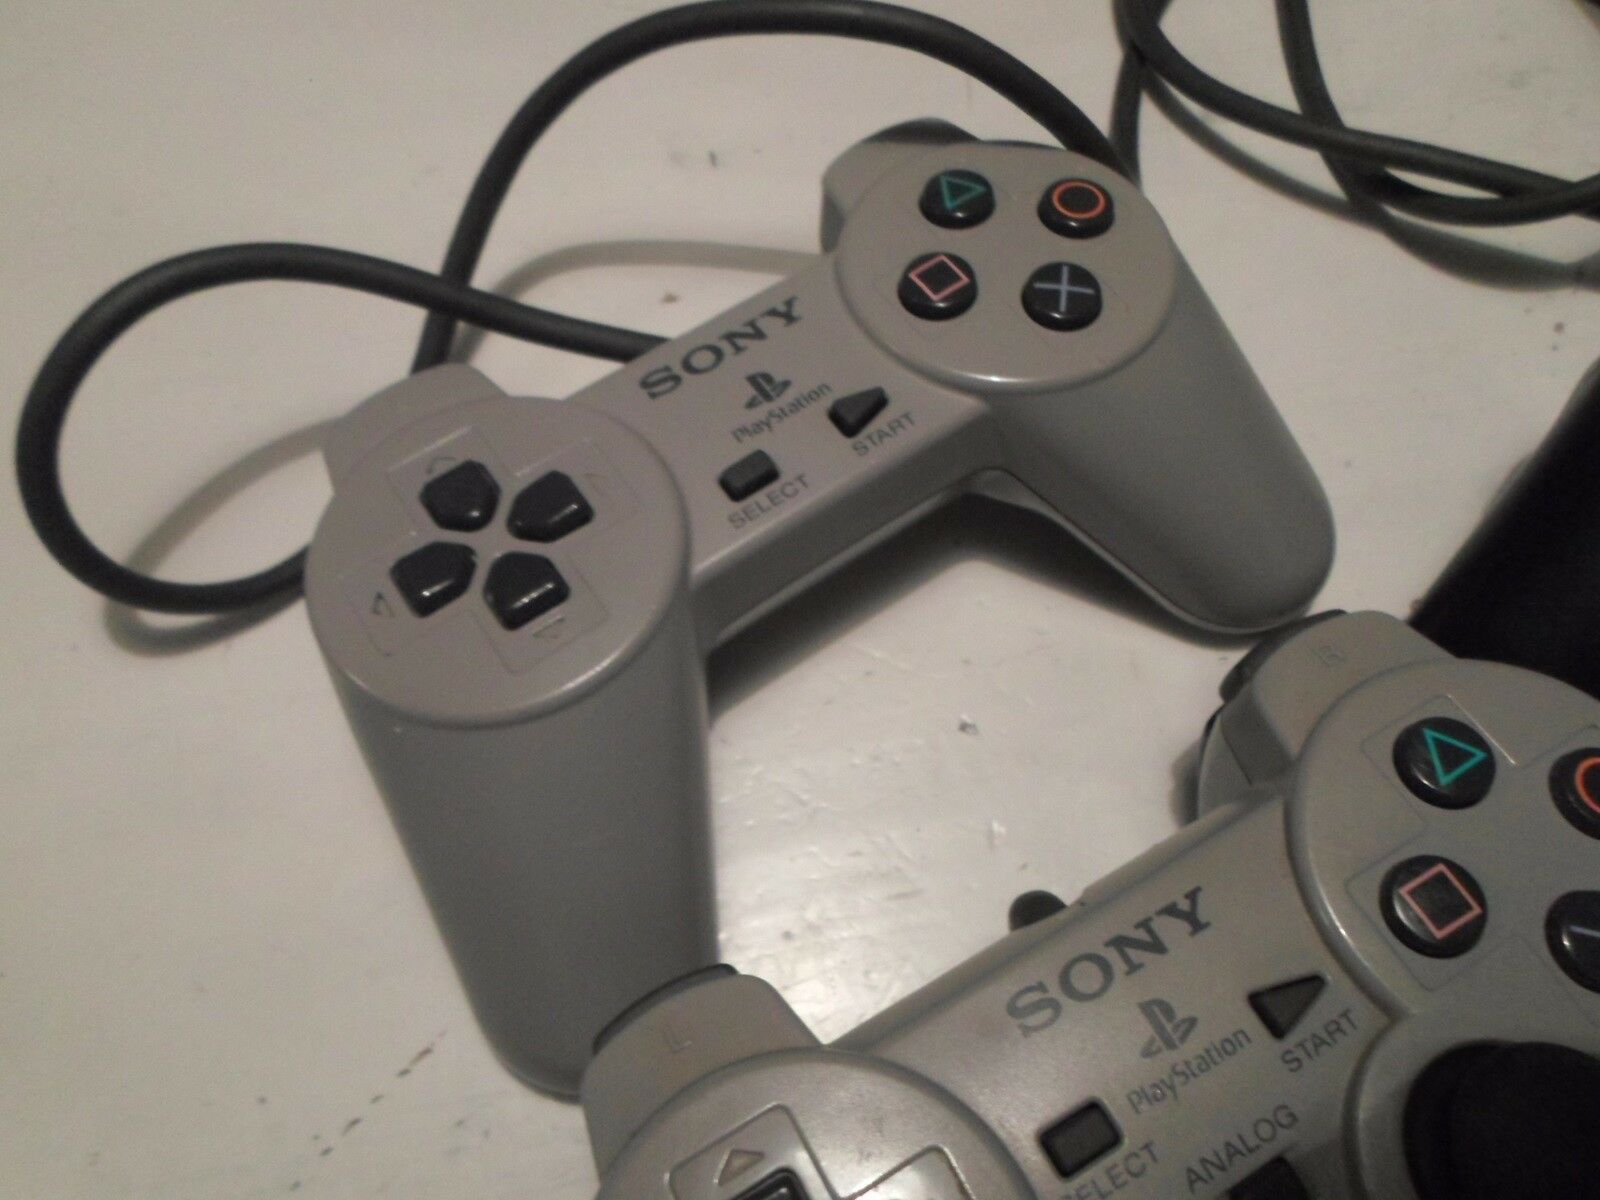 Controller, Playstation 1, Sony Playstation